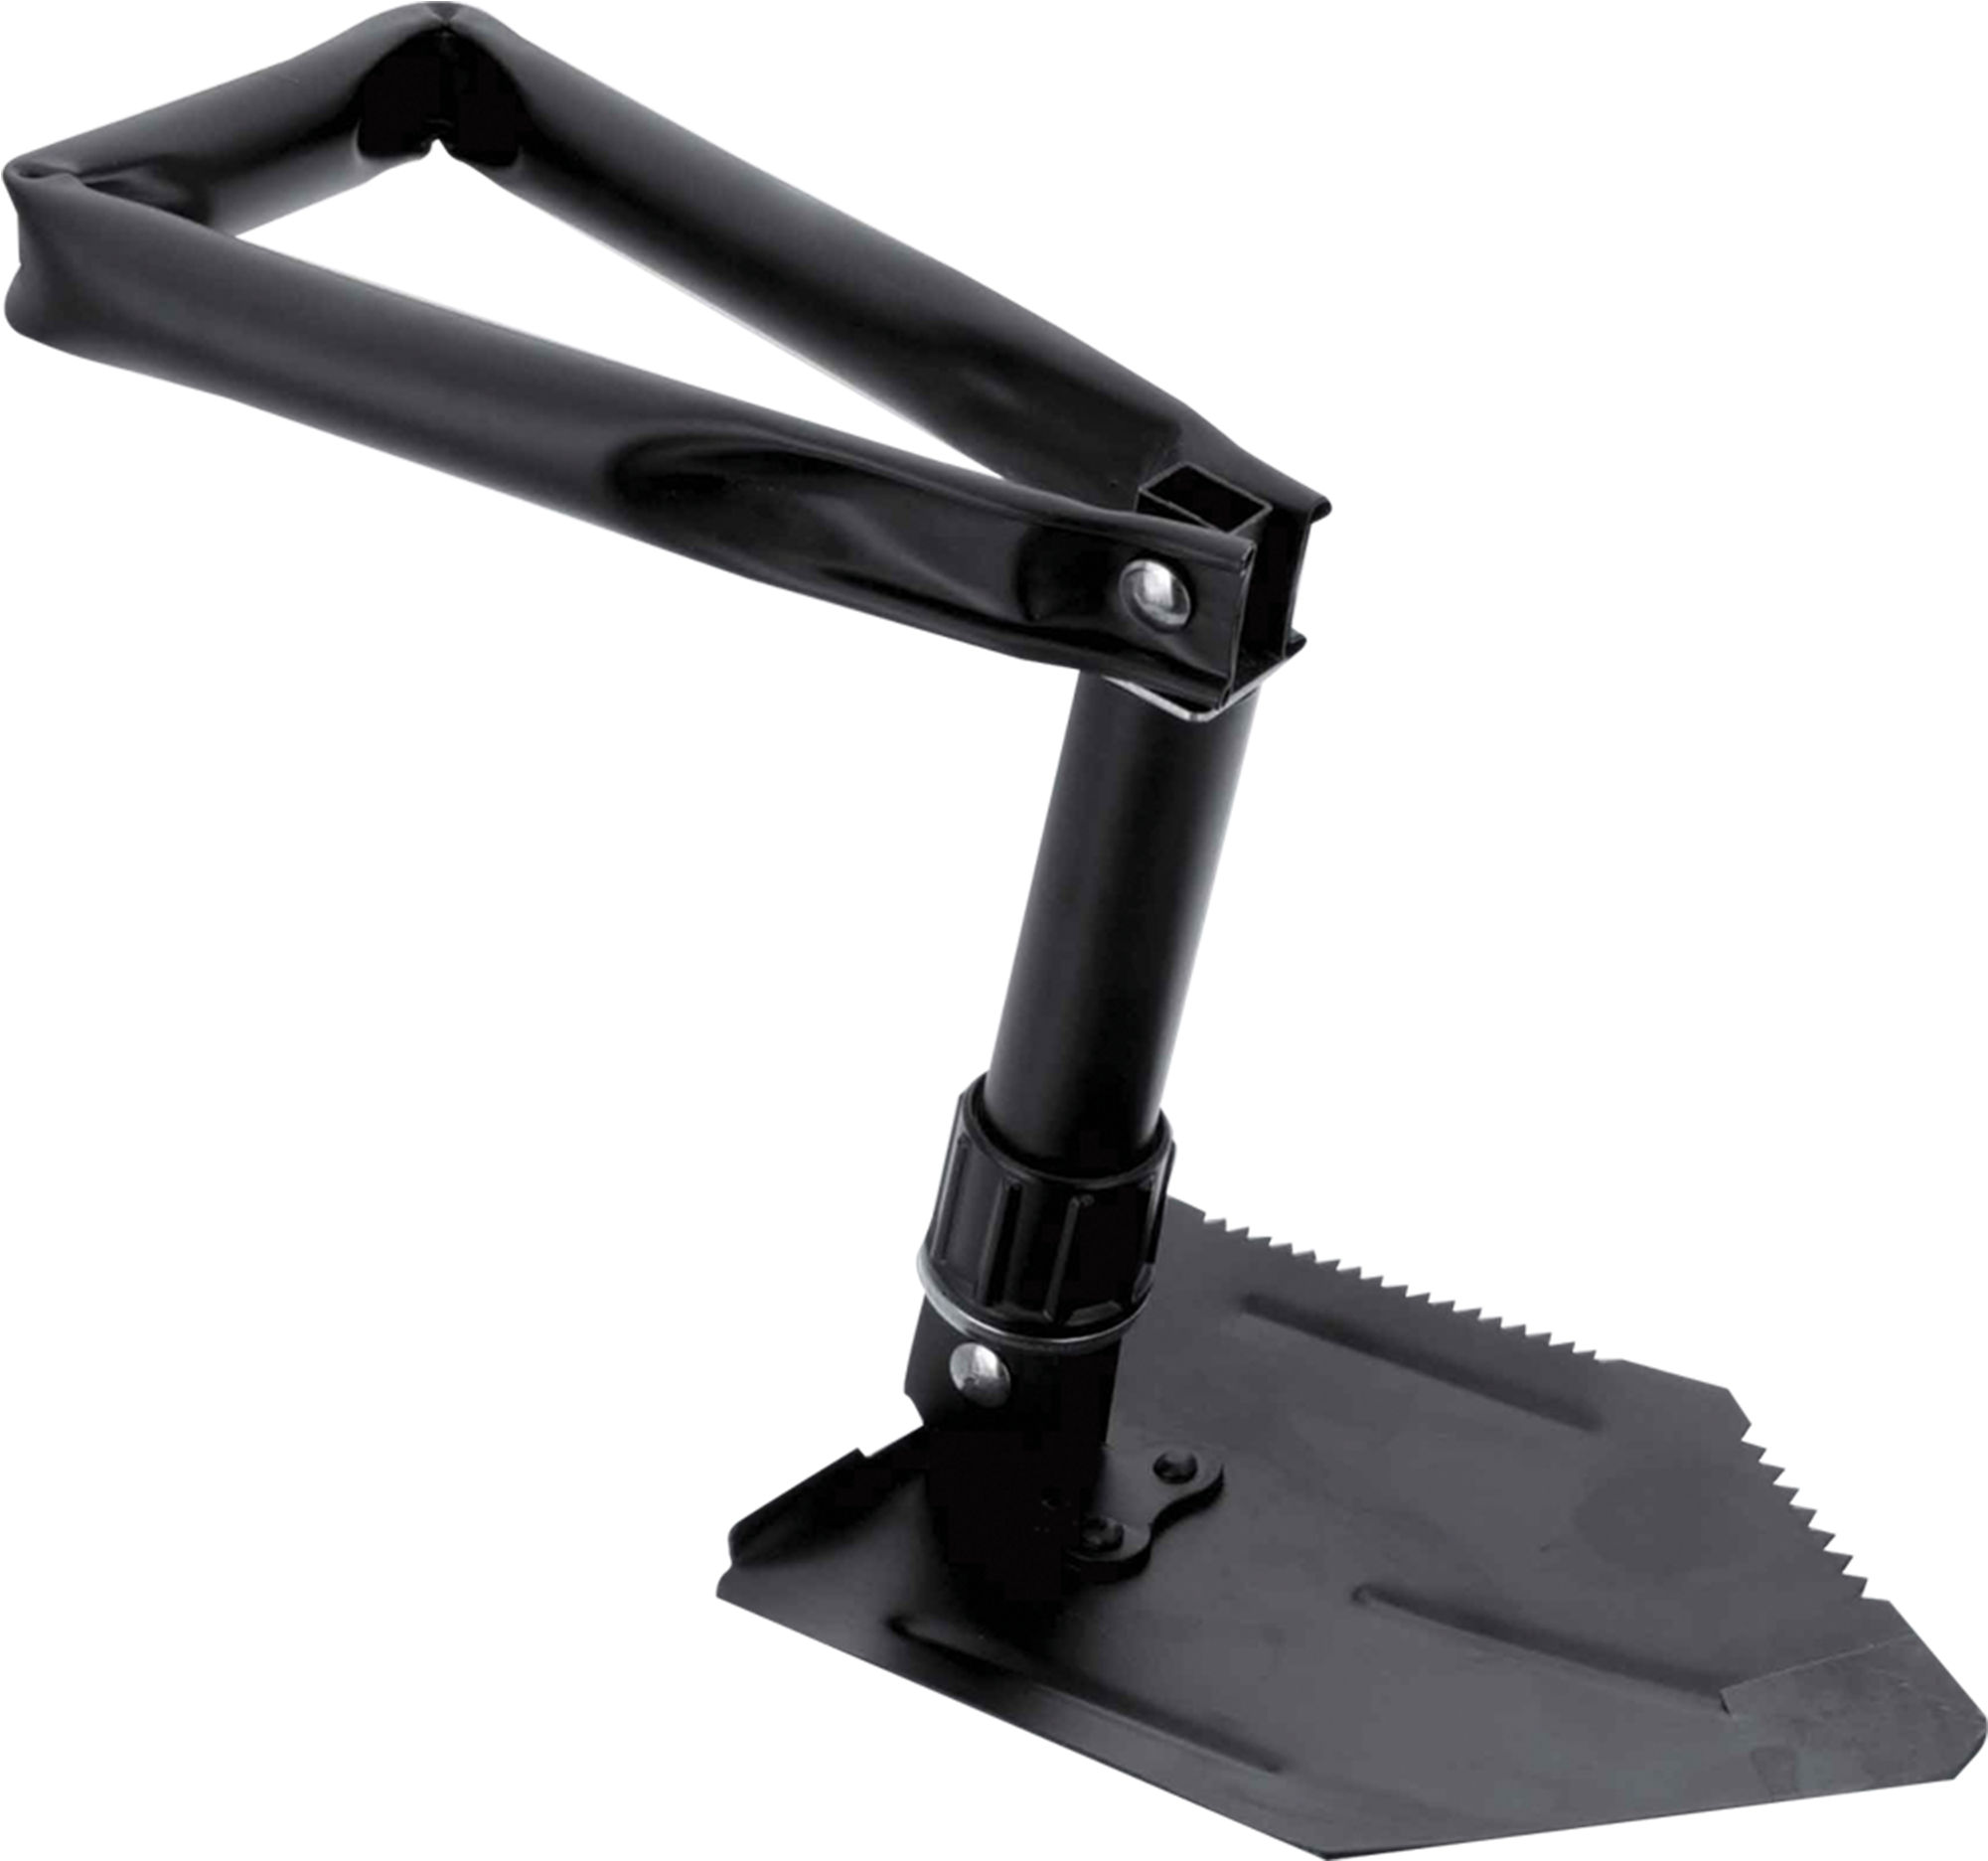 A Black Metal Shovel With A Handle